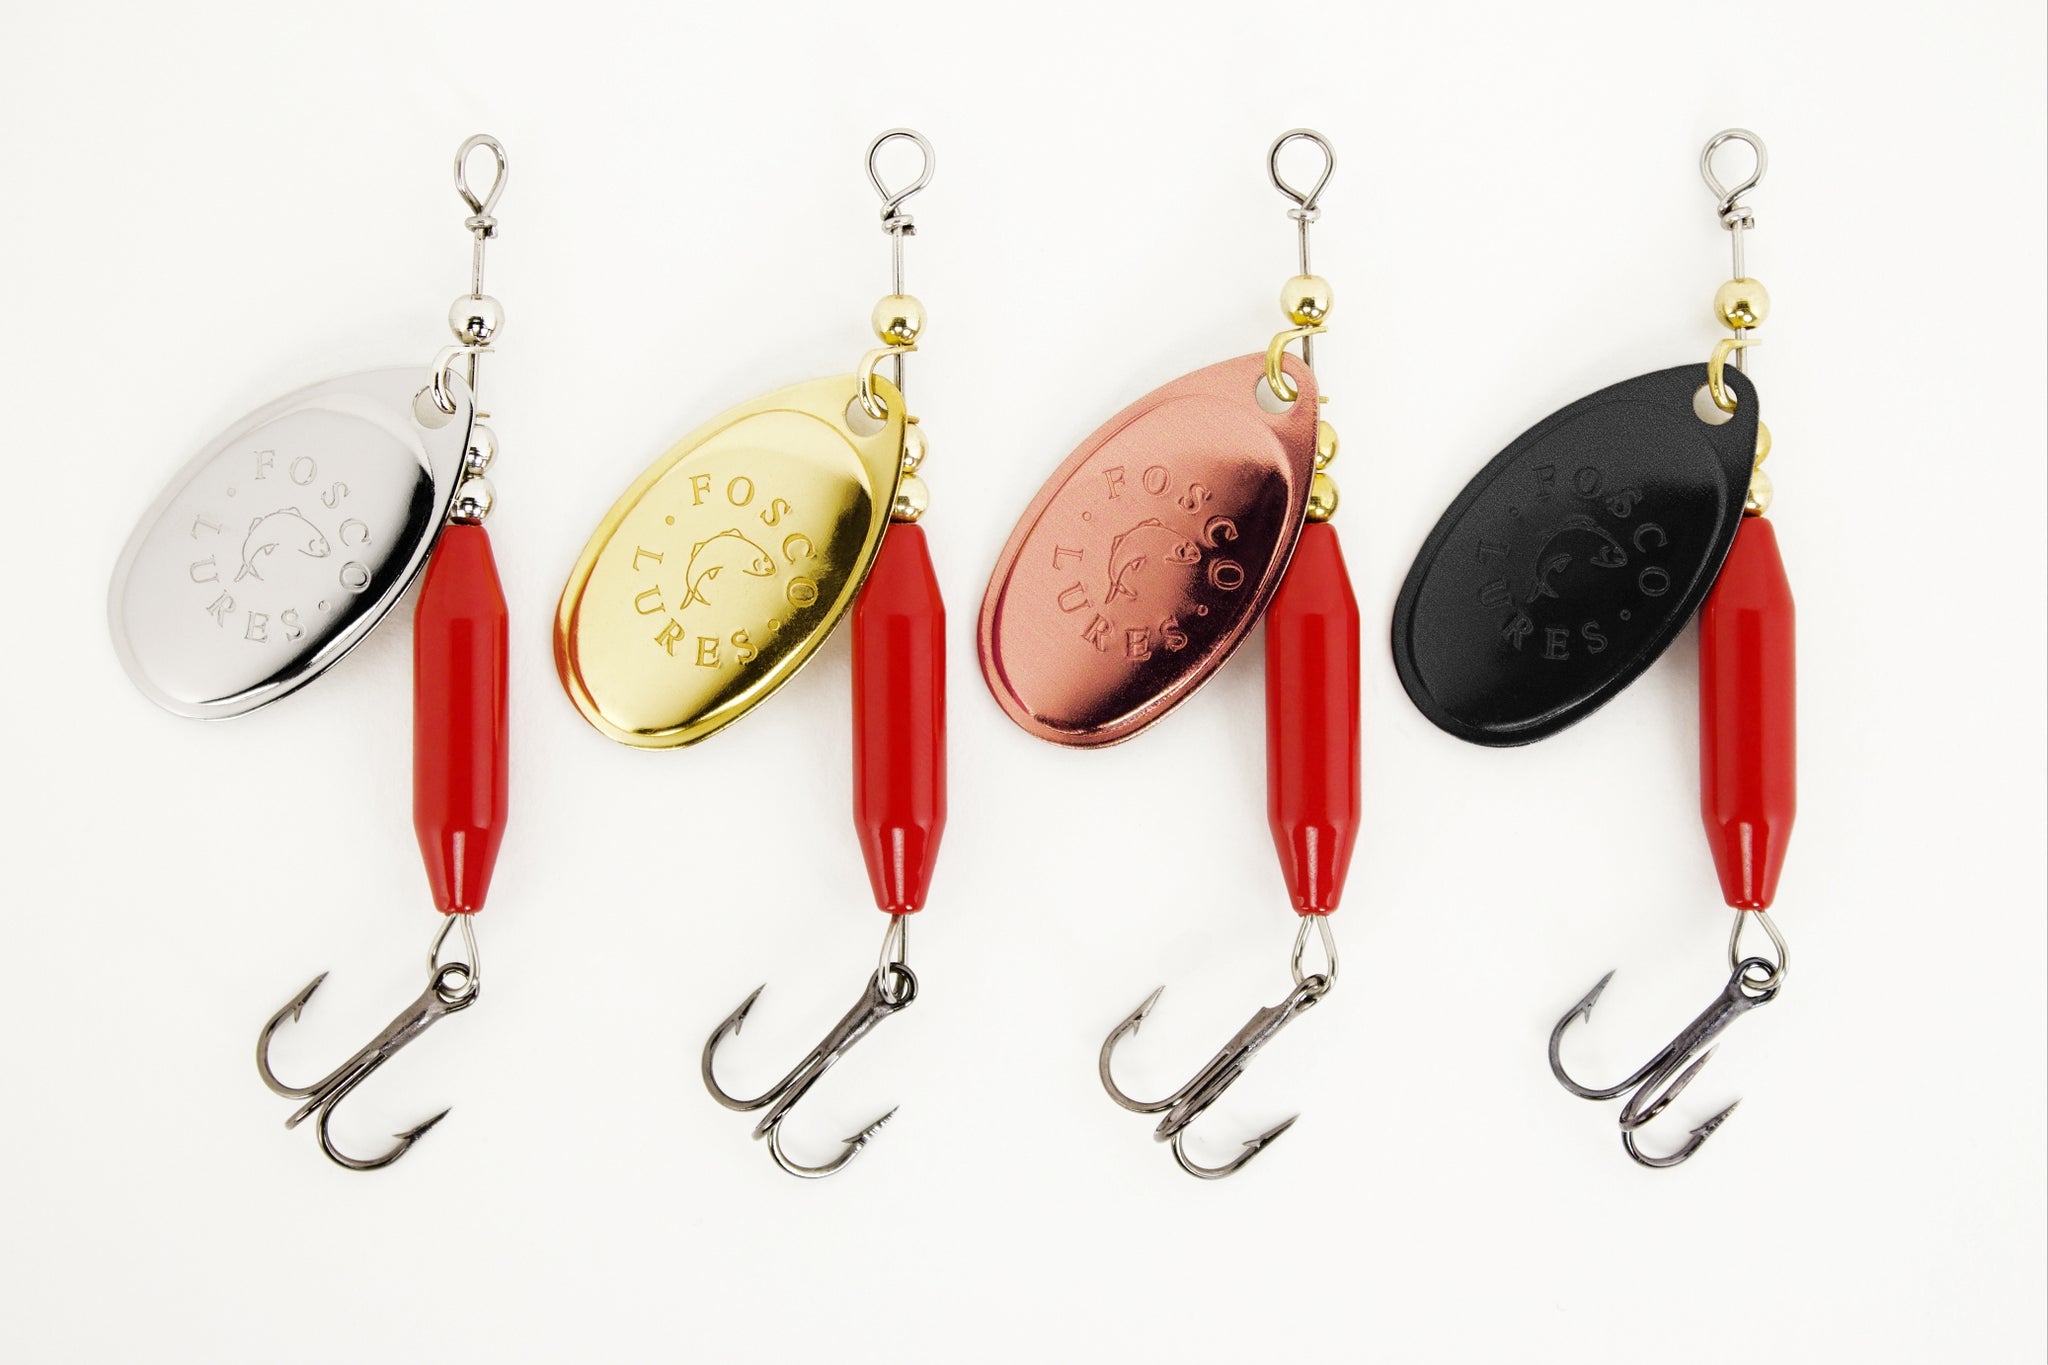 Fosco Handmade Fishing Lures • Red Inline Spinner • Made By Hand In Canada  – Fosco Fishing Lures